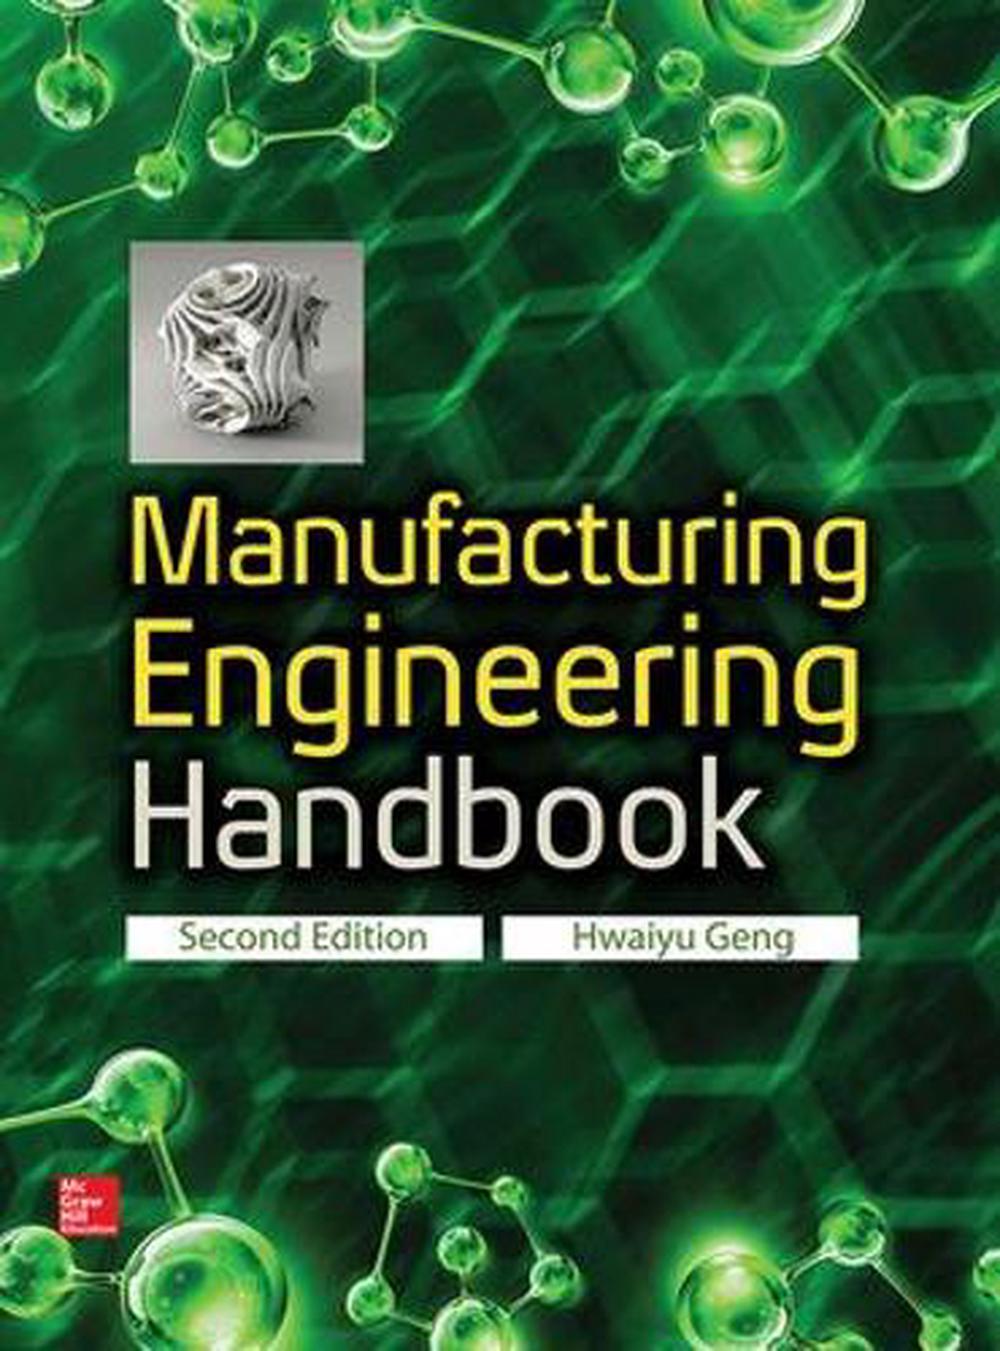 knife engineering book pdf free download